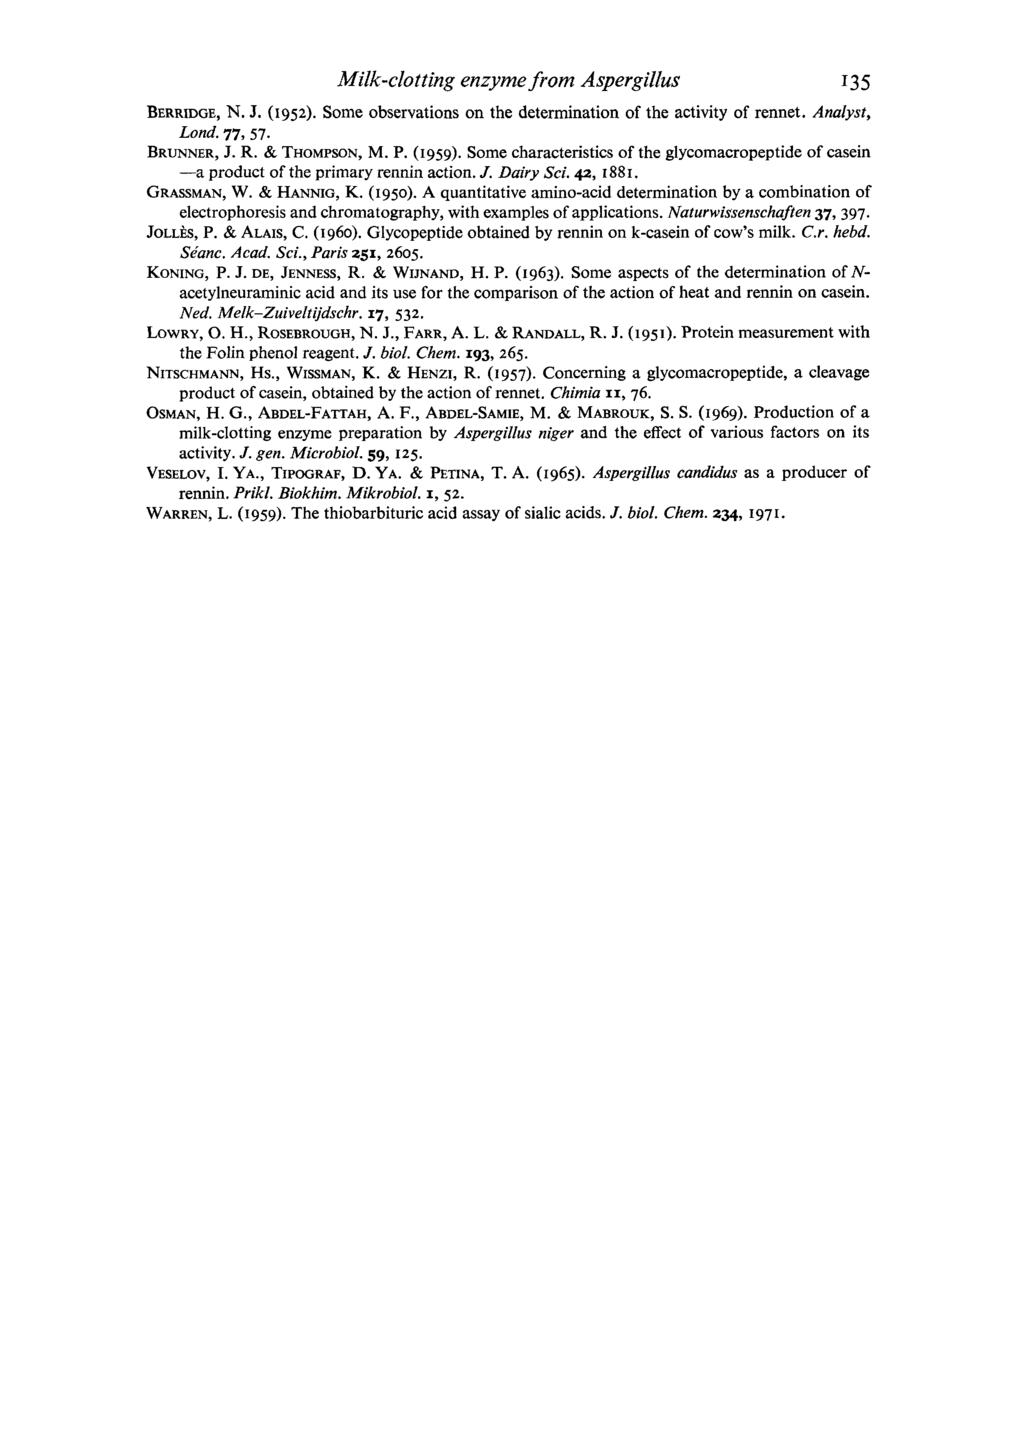 Milk-clotting enzyme from Aspergiltus BERRIDGE, N. J. (1952). Some observations on the determination of the activity of rennet. Analyst, Land. 77, 57. BRUNNER, J. R. & THOMPSON, M. P. (1959).